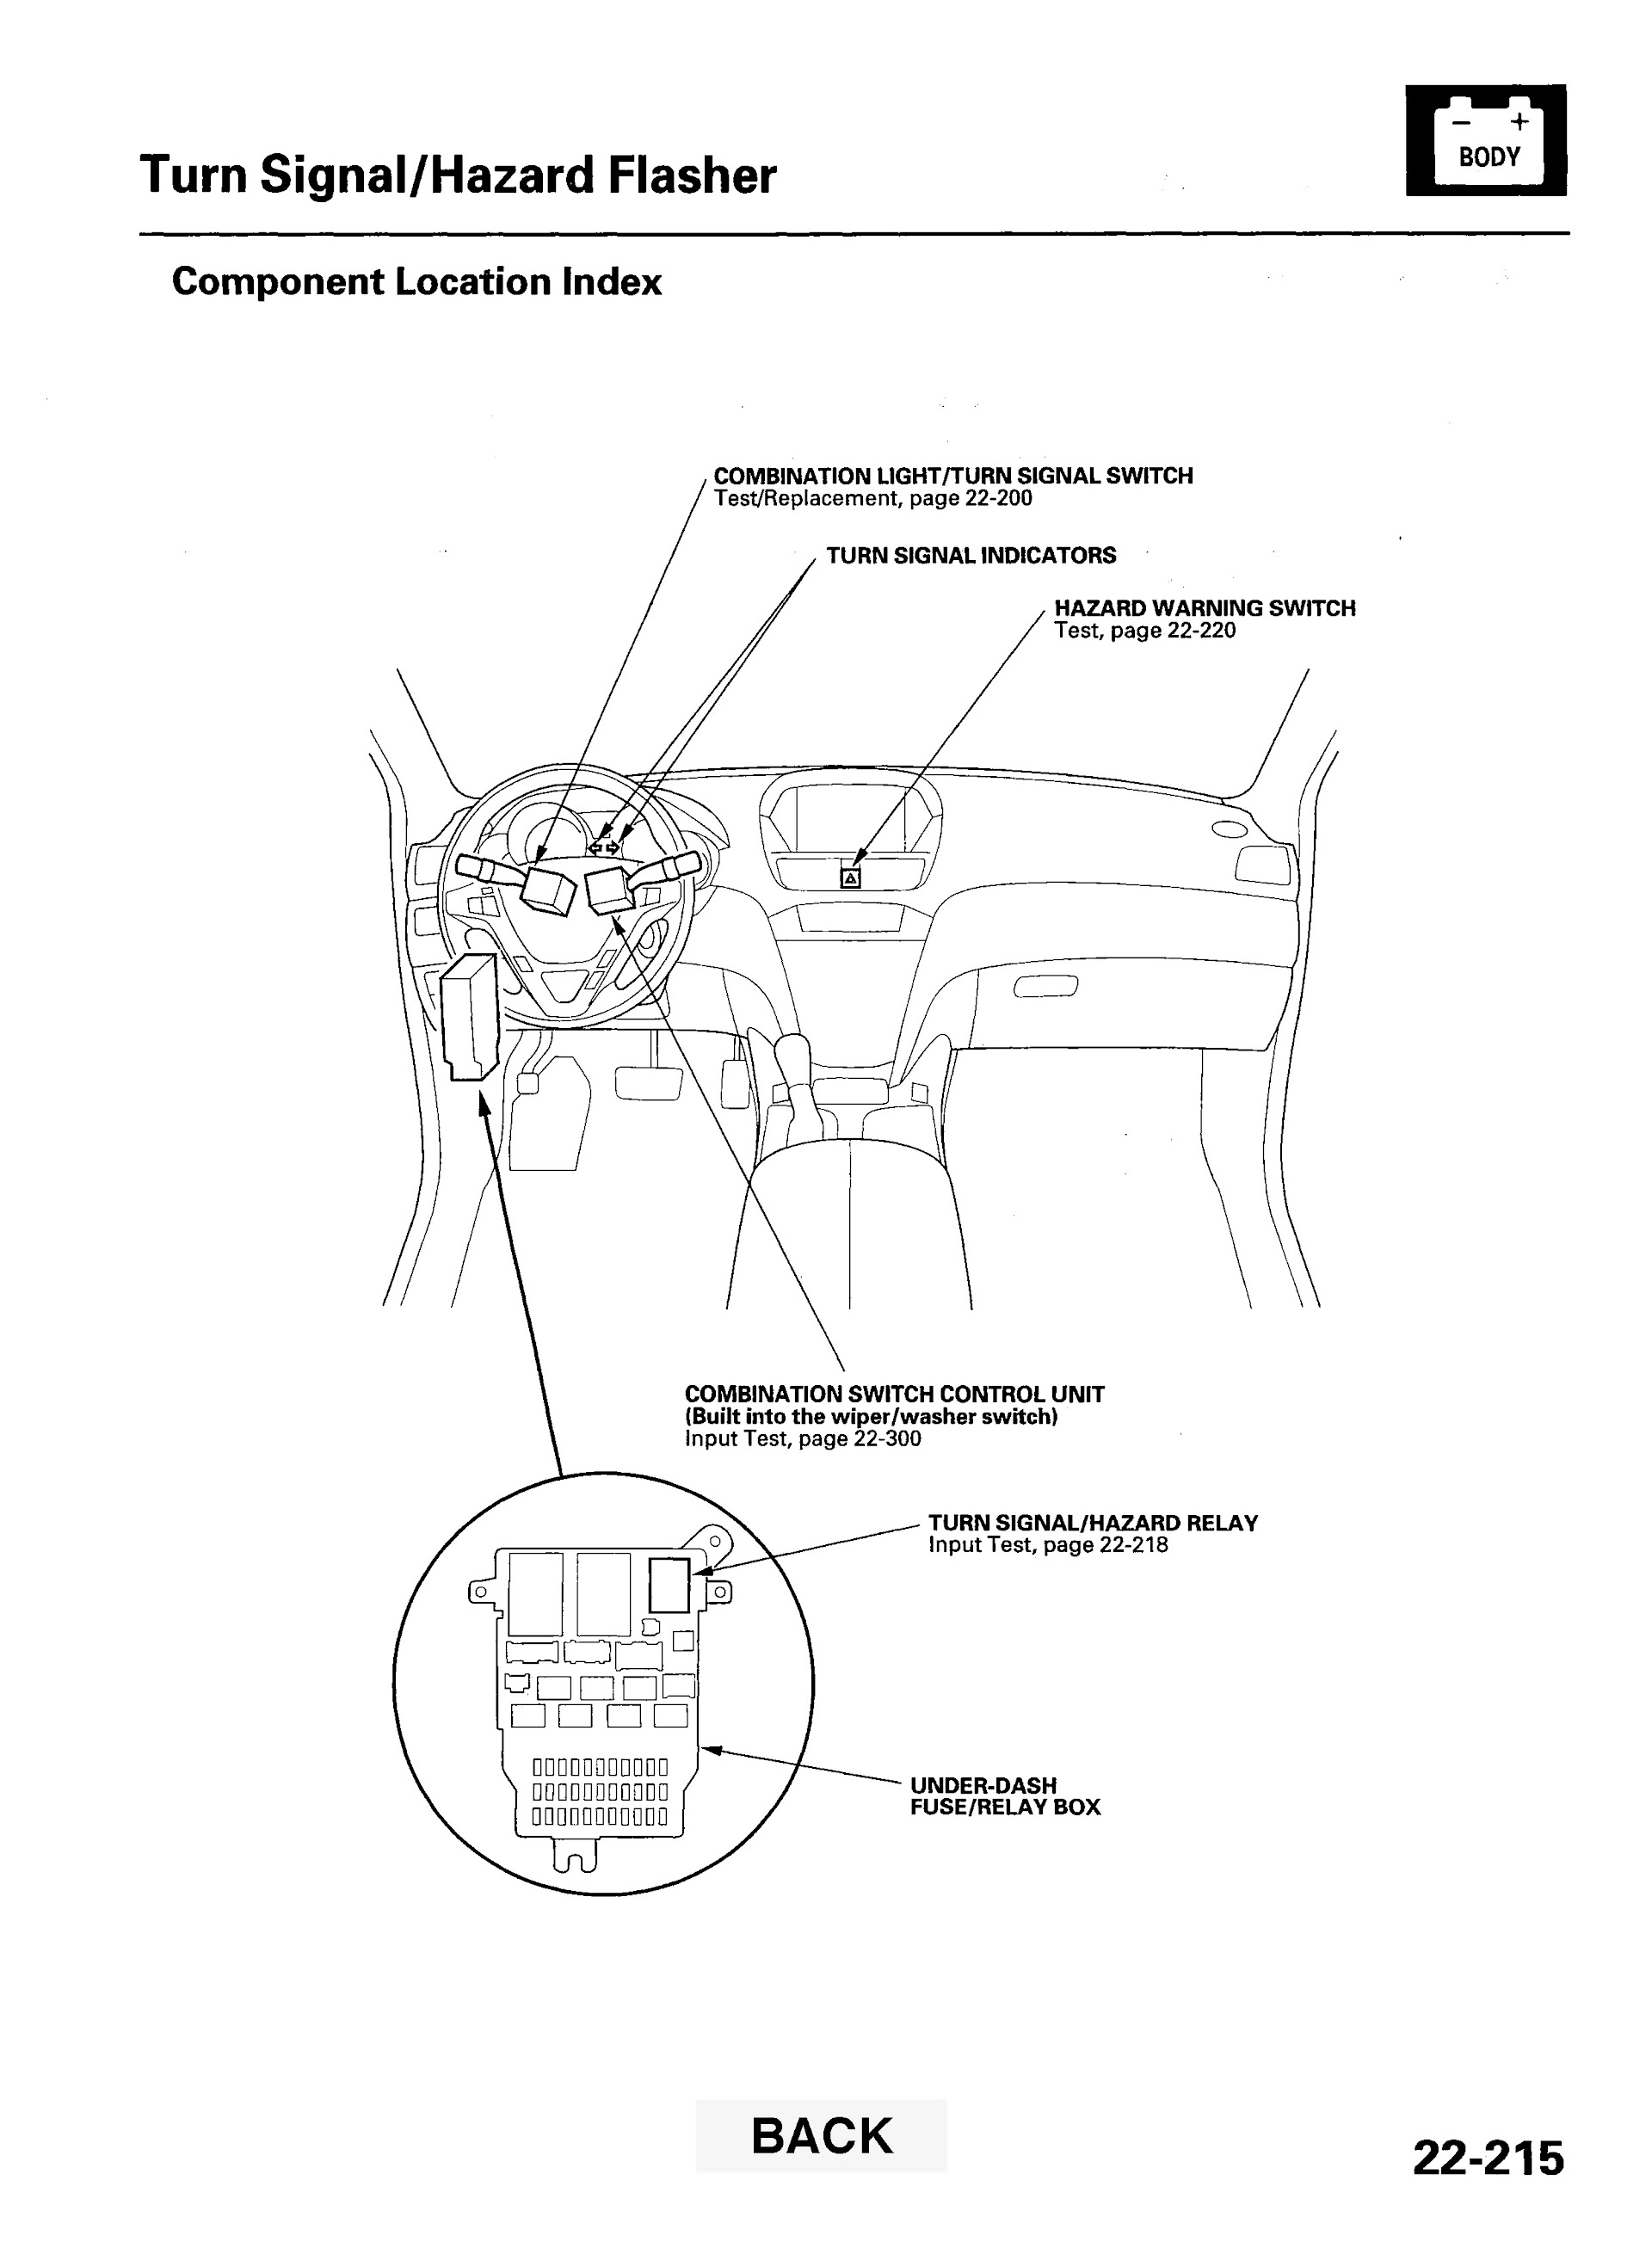 2009 Acura Mdx Repair Manual, Turn Signal Hazard Flasher